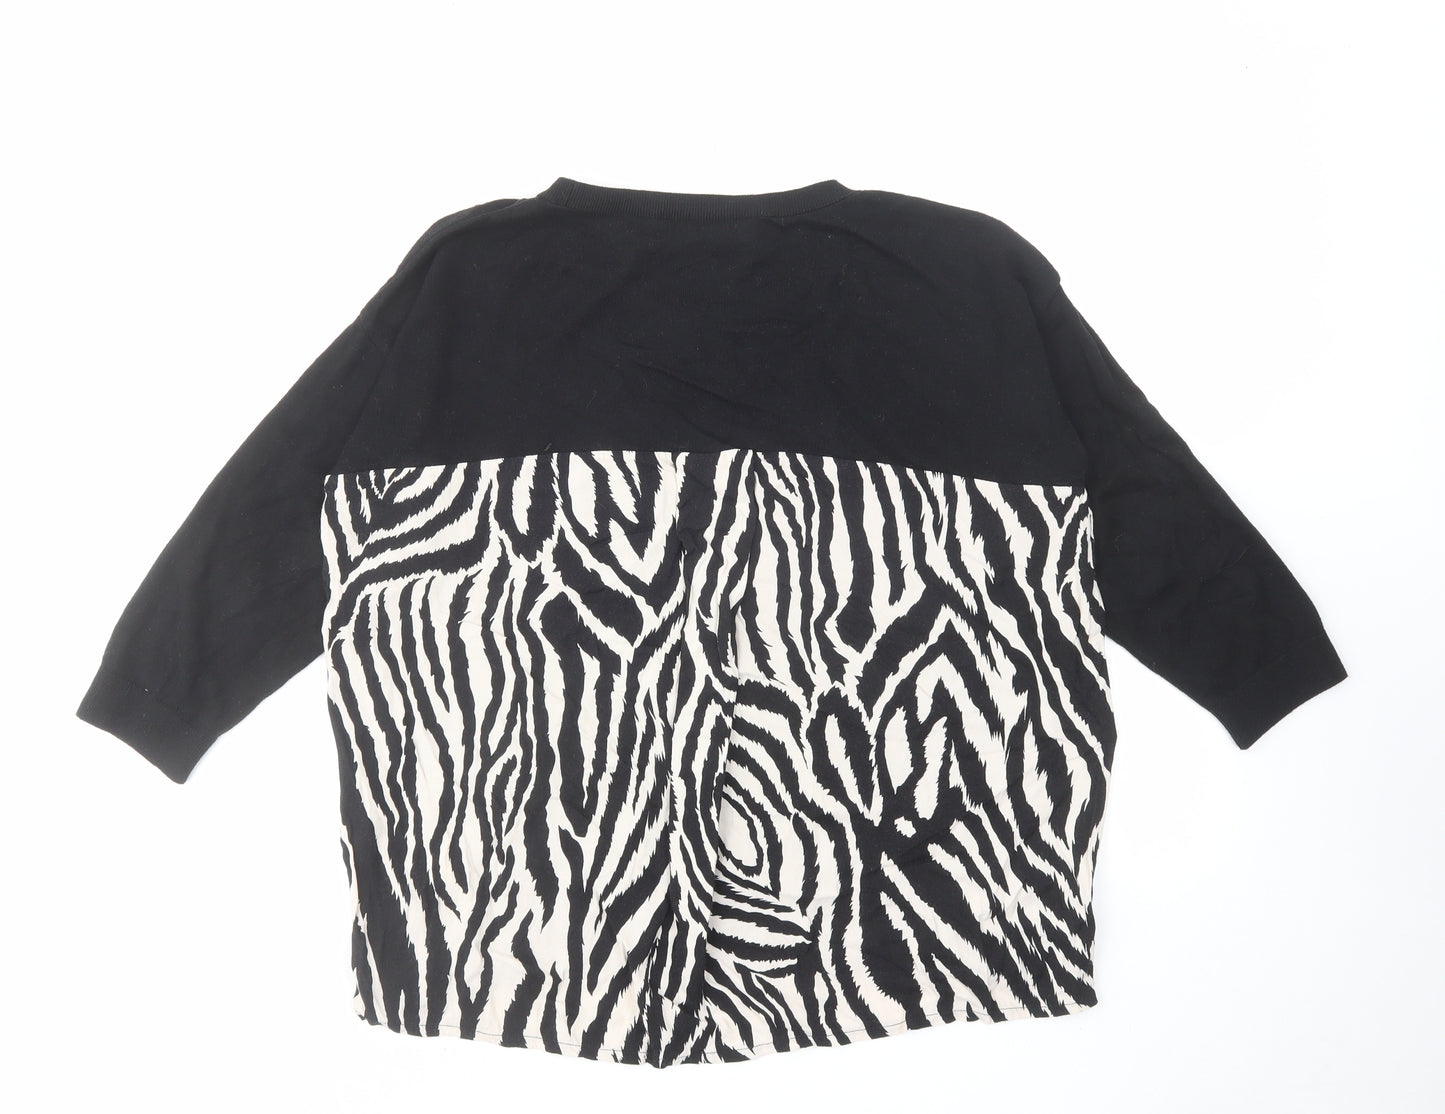 Wallis Womens Black Round Neck Animal Print Acrylic Pullover Jumper Size M - Zebra Print